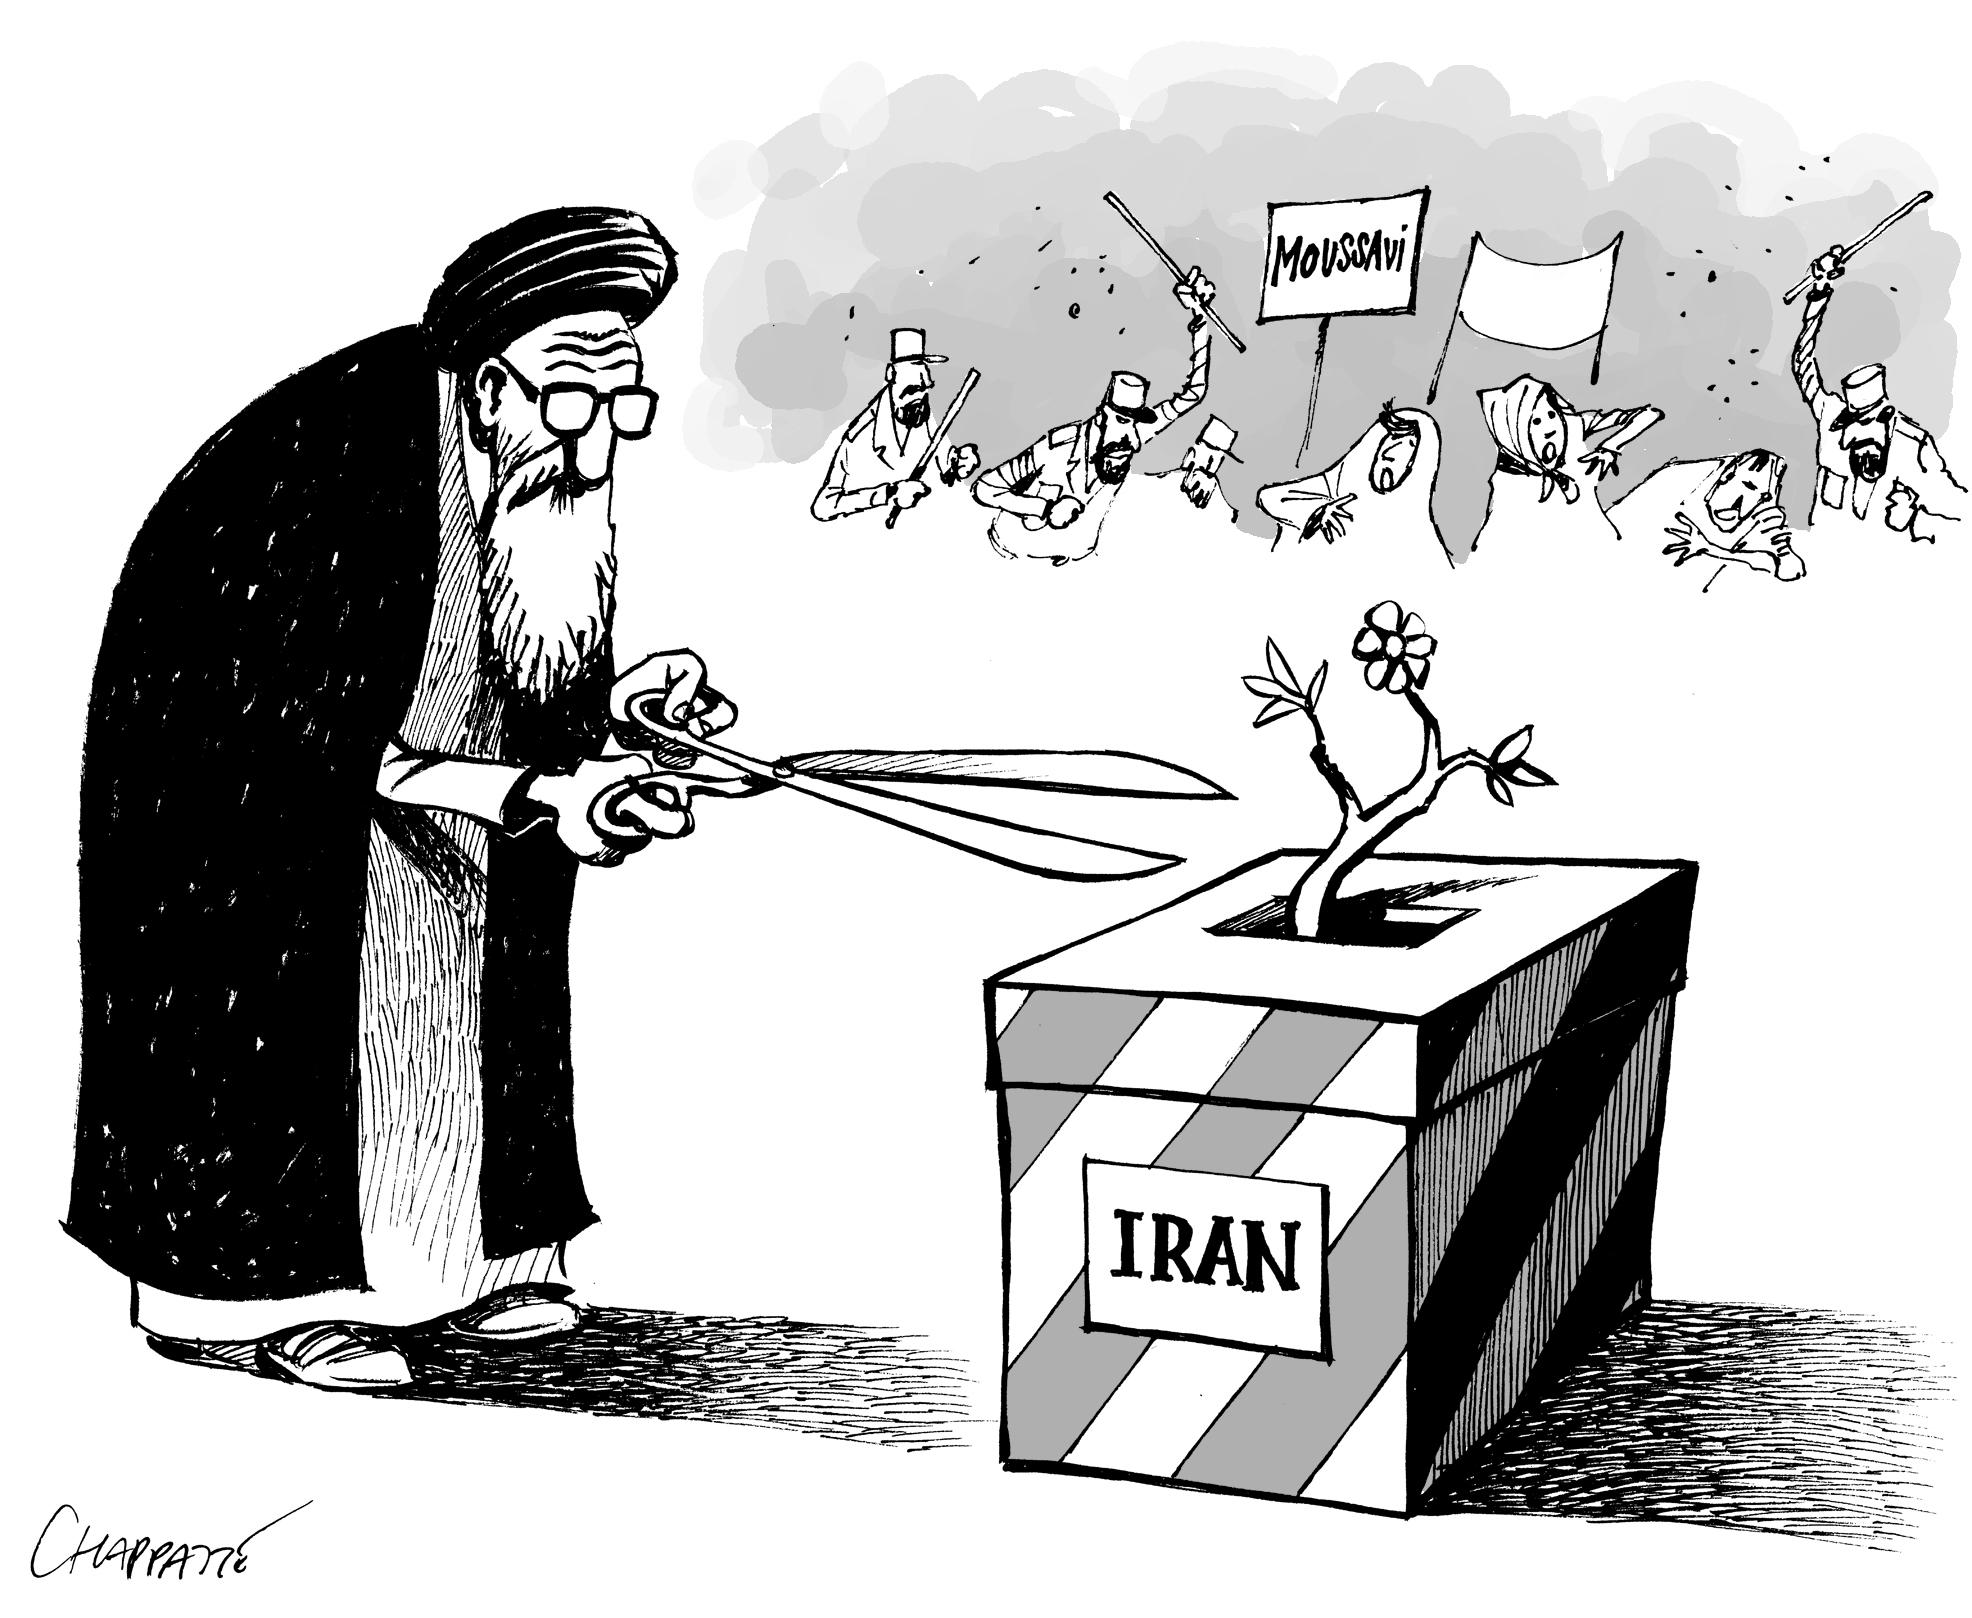 No change in Iran